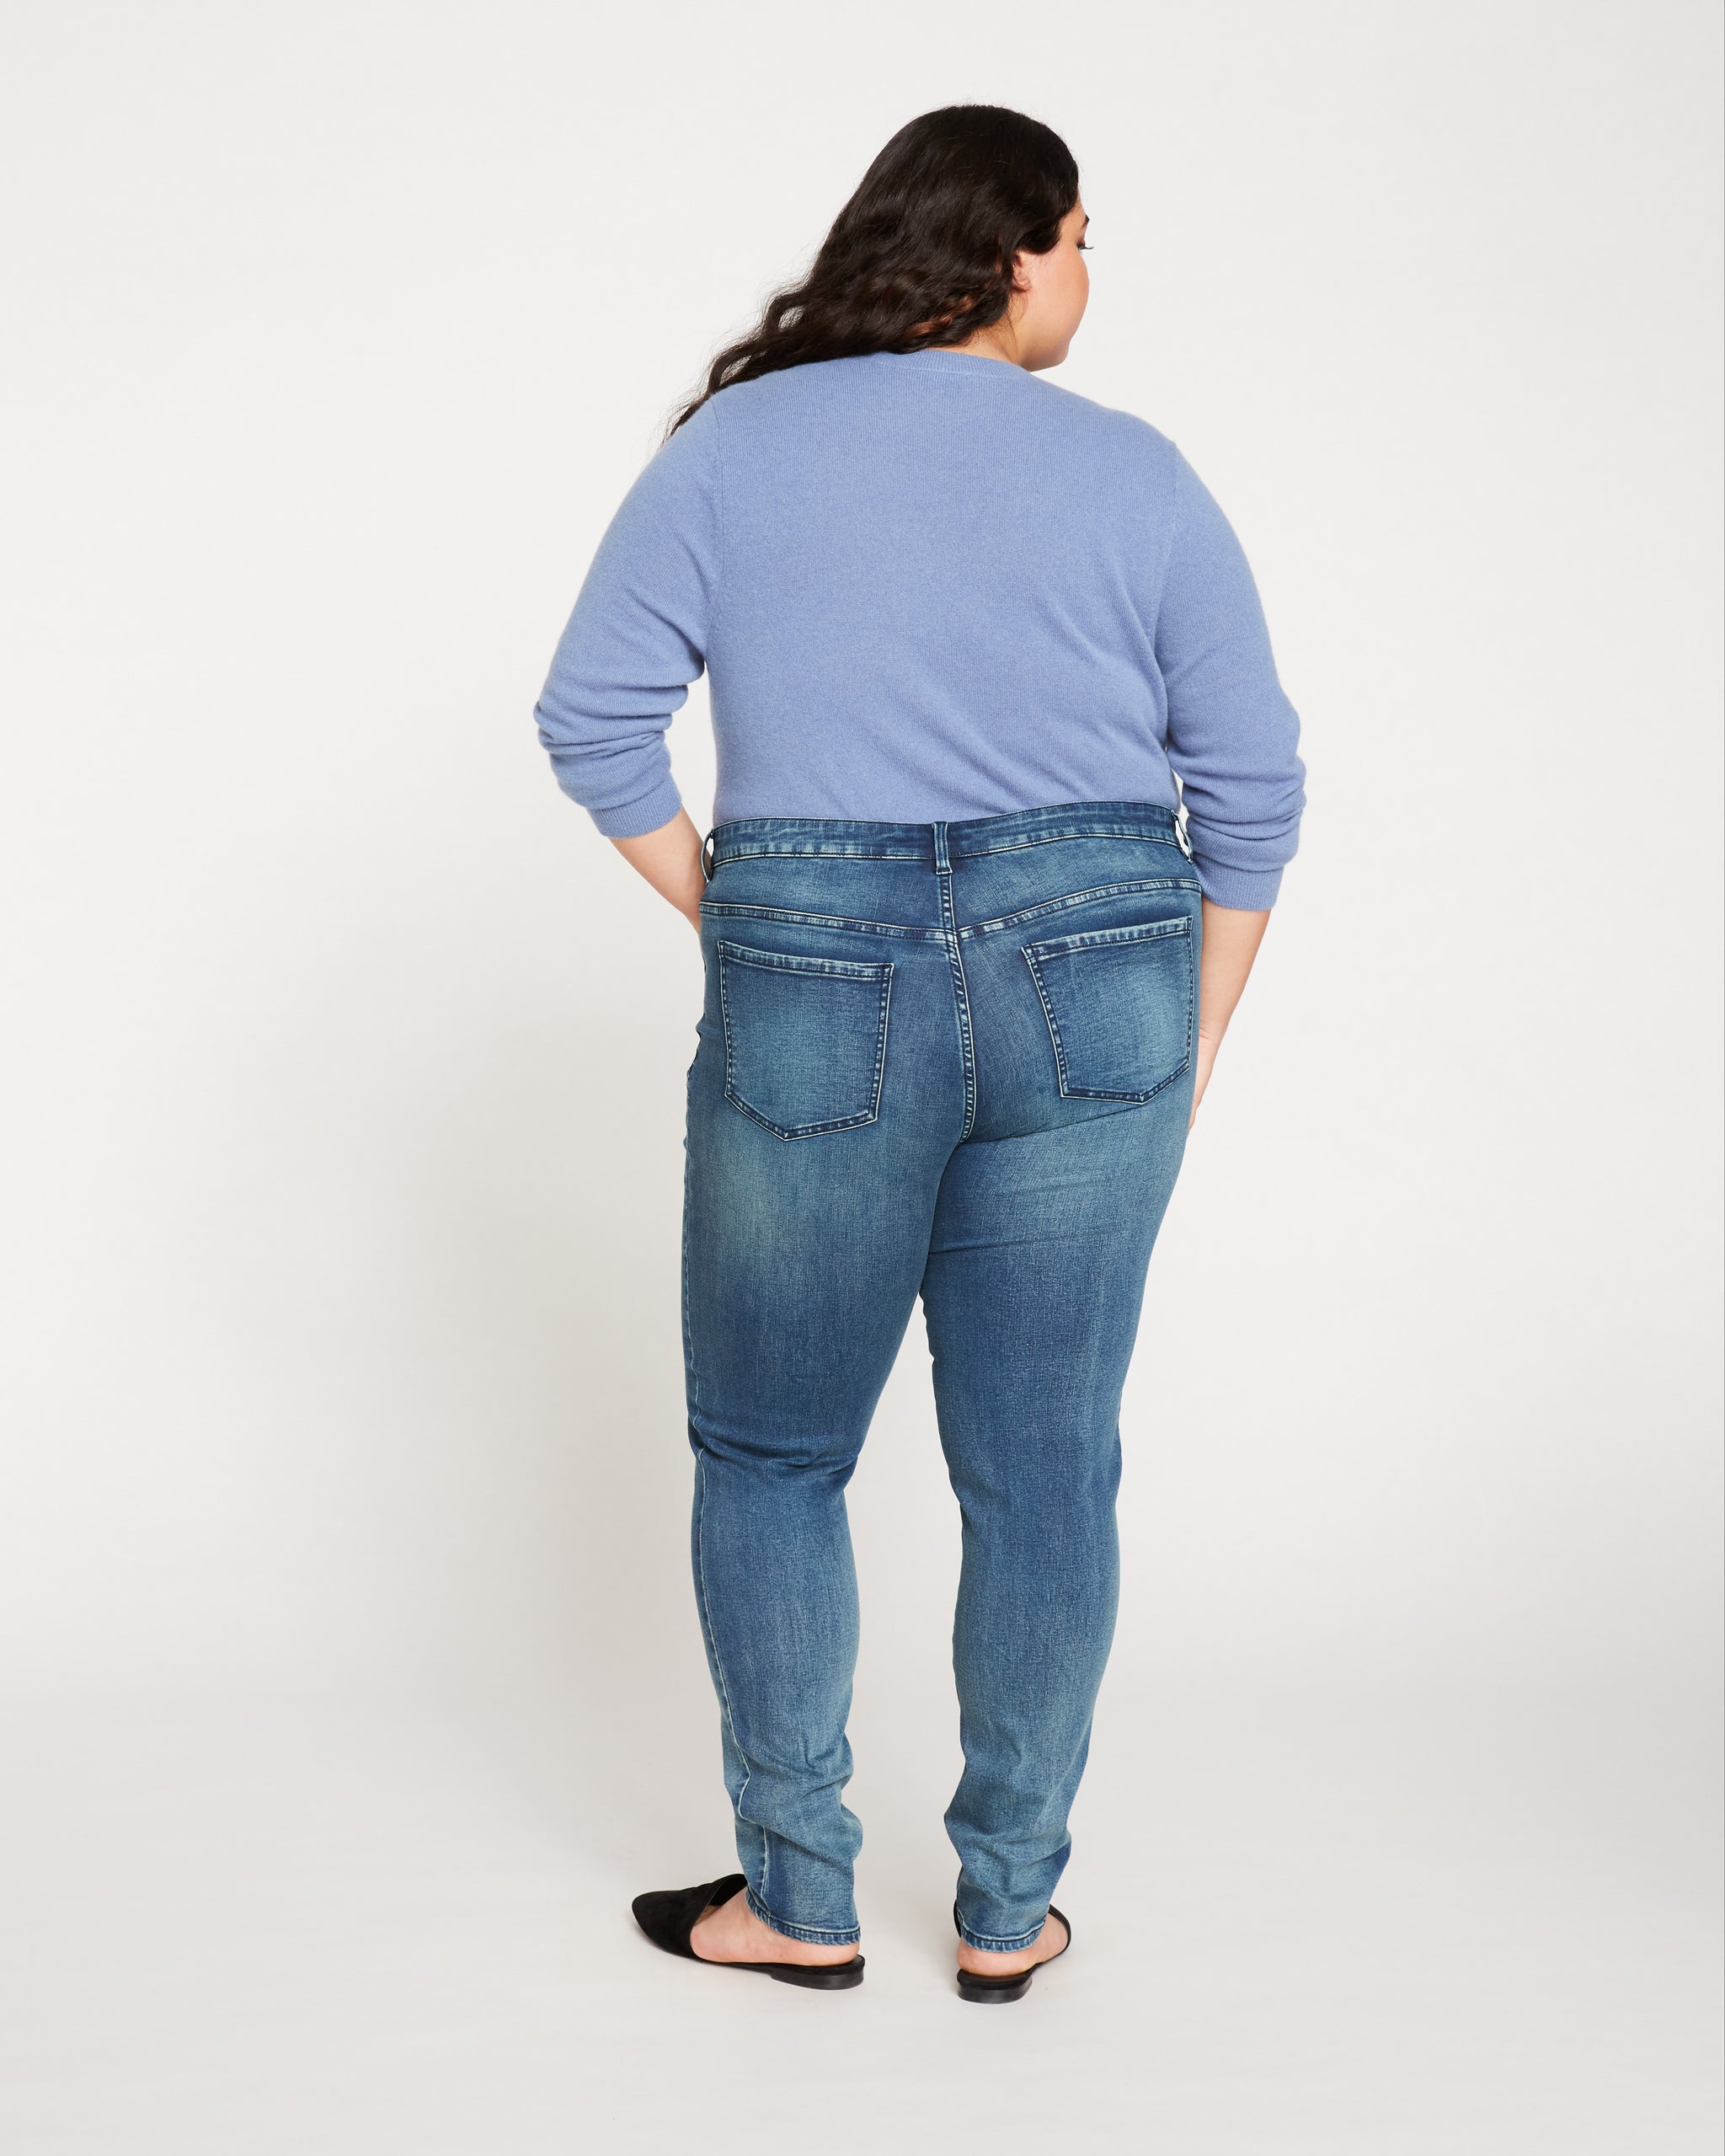 Seine Mid Rise Skinny Jeans 32 Inch - True Blue